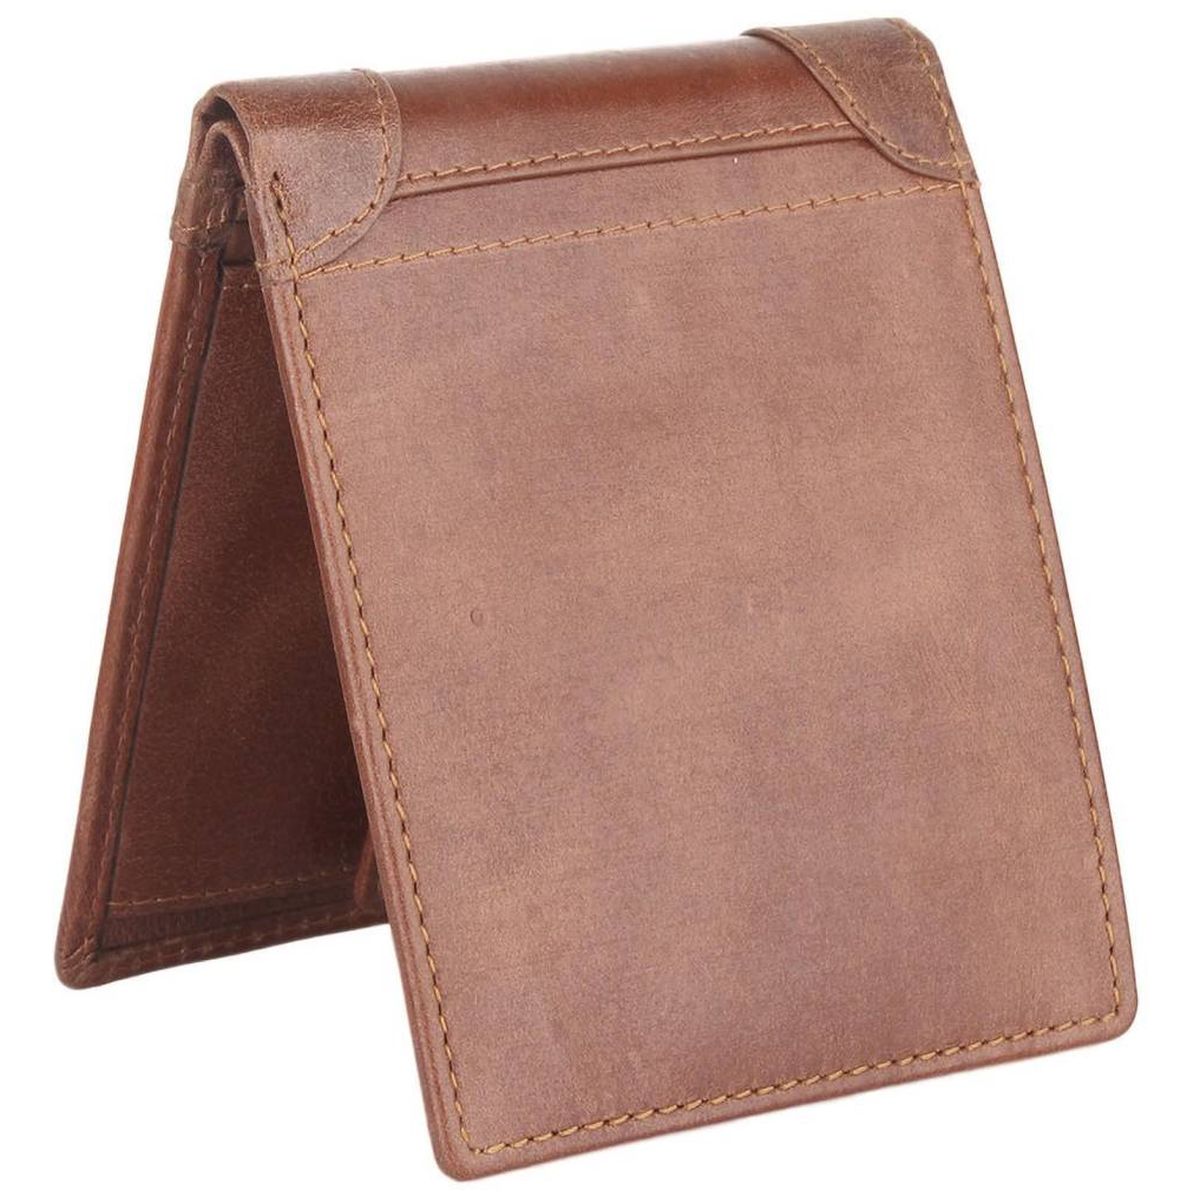 Craftwood Men Genuine Leather 3 Slots Wallet, DI934409, Brown